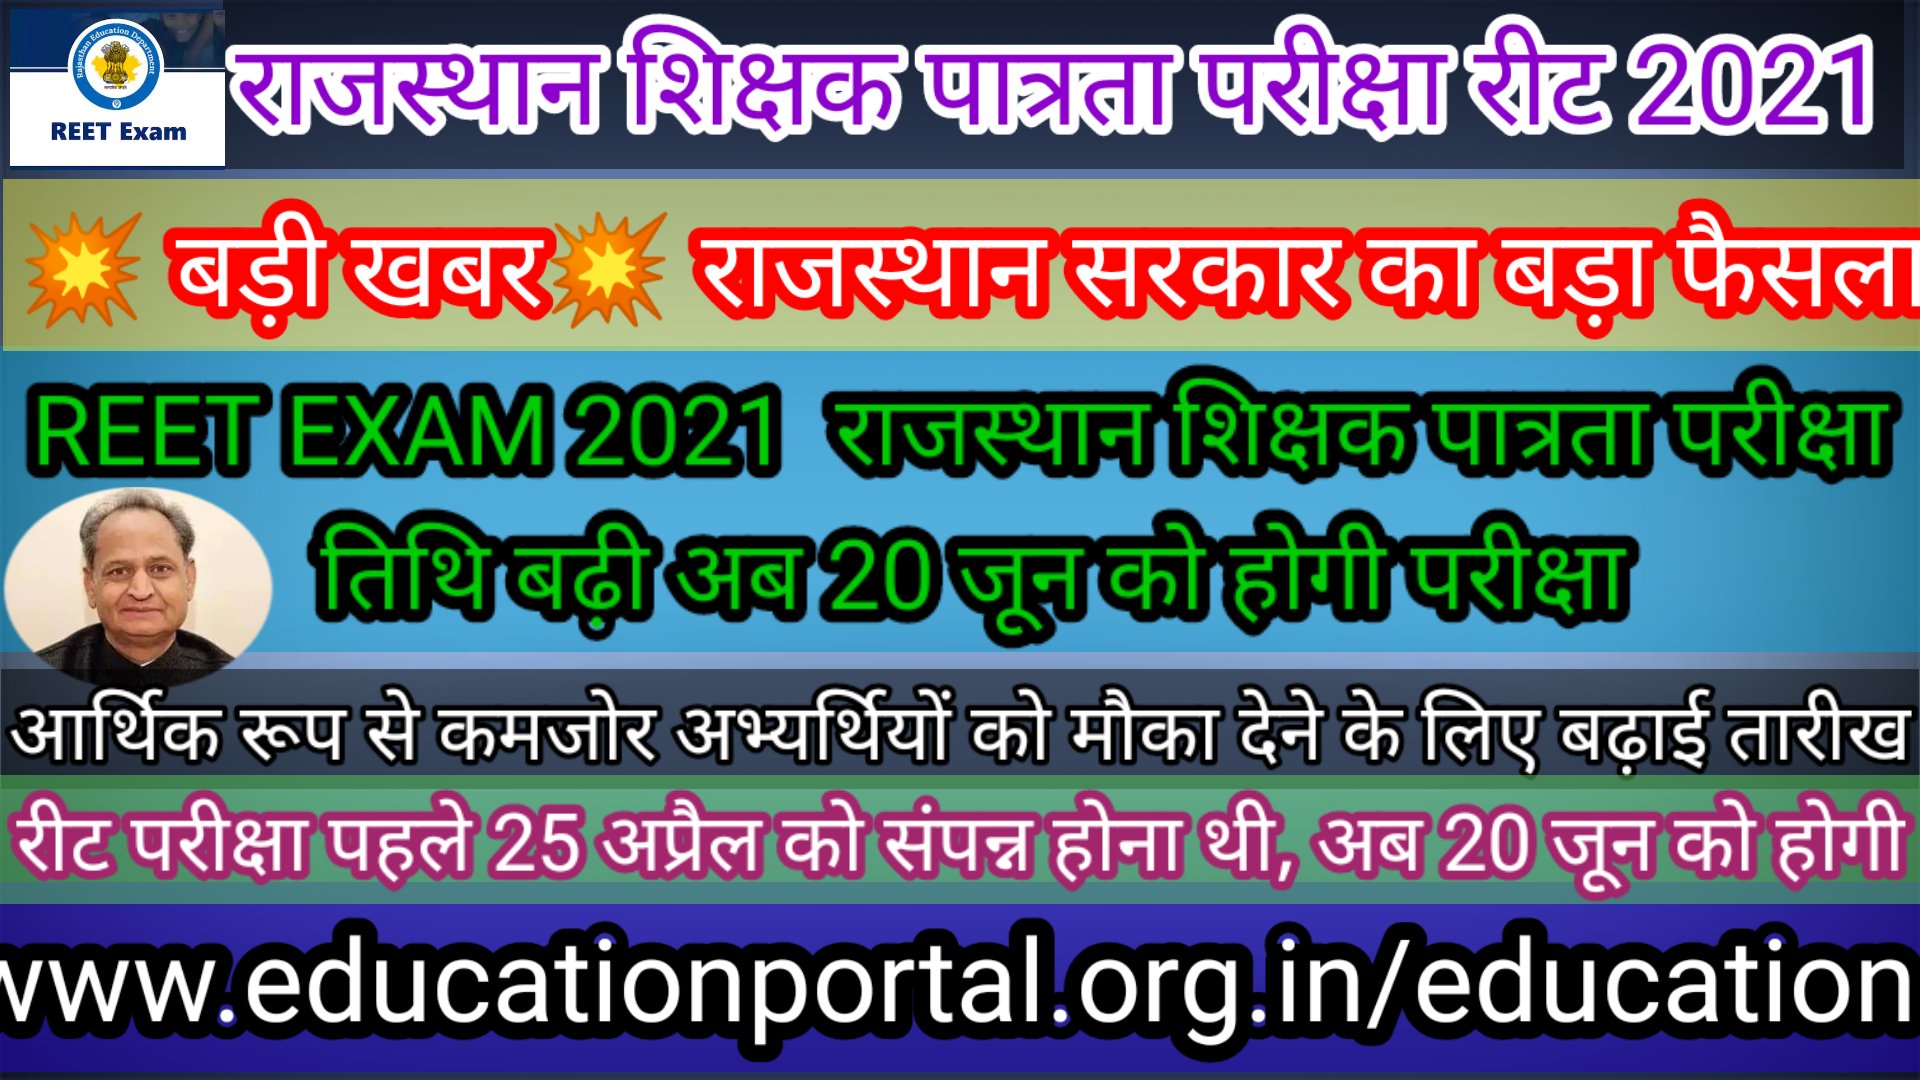 Reet exam 2021 latest update रीट परीक्षा स्थगित अब 20 जून को होगी परीक्षा, ईडब्ल्यूएस आर्थिक रूप से कमजोर वर्ग को आरक्षण देने के लिए बढ़ाई गई परीक्षा तिथि - माध्यमिक शिक्षा बोर्ड अजमेर राजस्थान